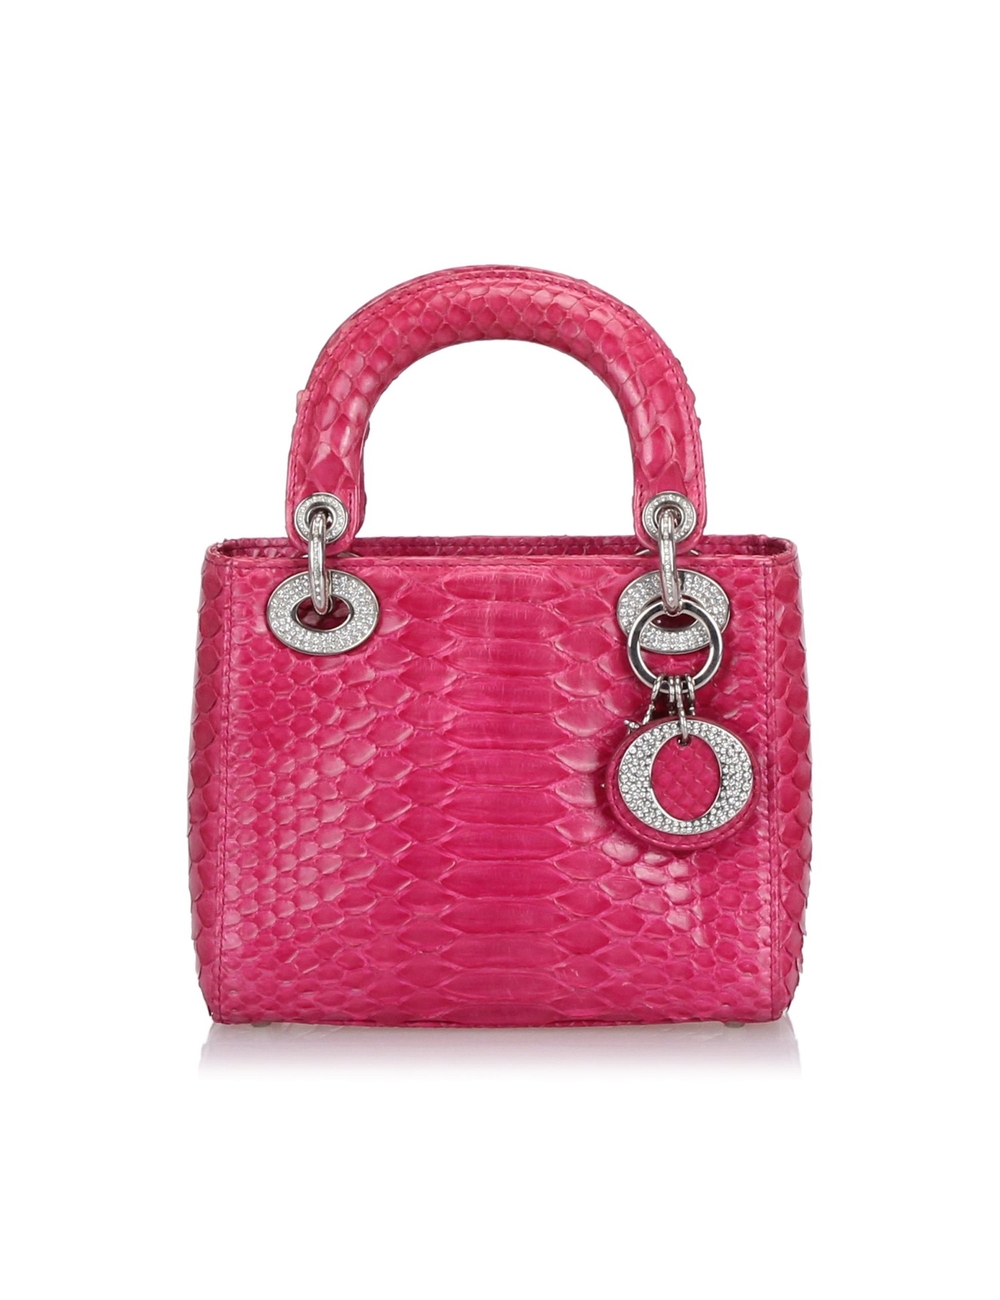 Product Details: Pink Dior Mini Python Lady Dior Handbag Bag. The Lady Dior features a python leathe